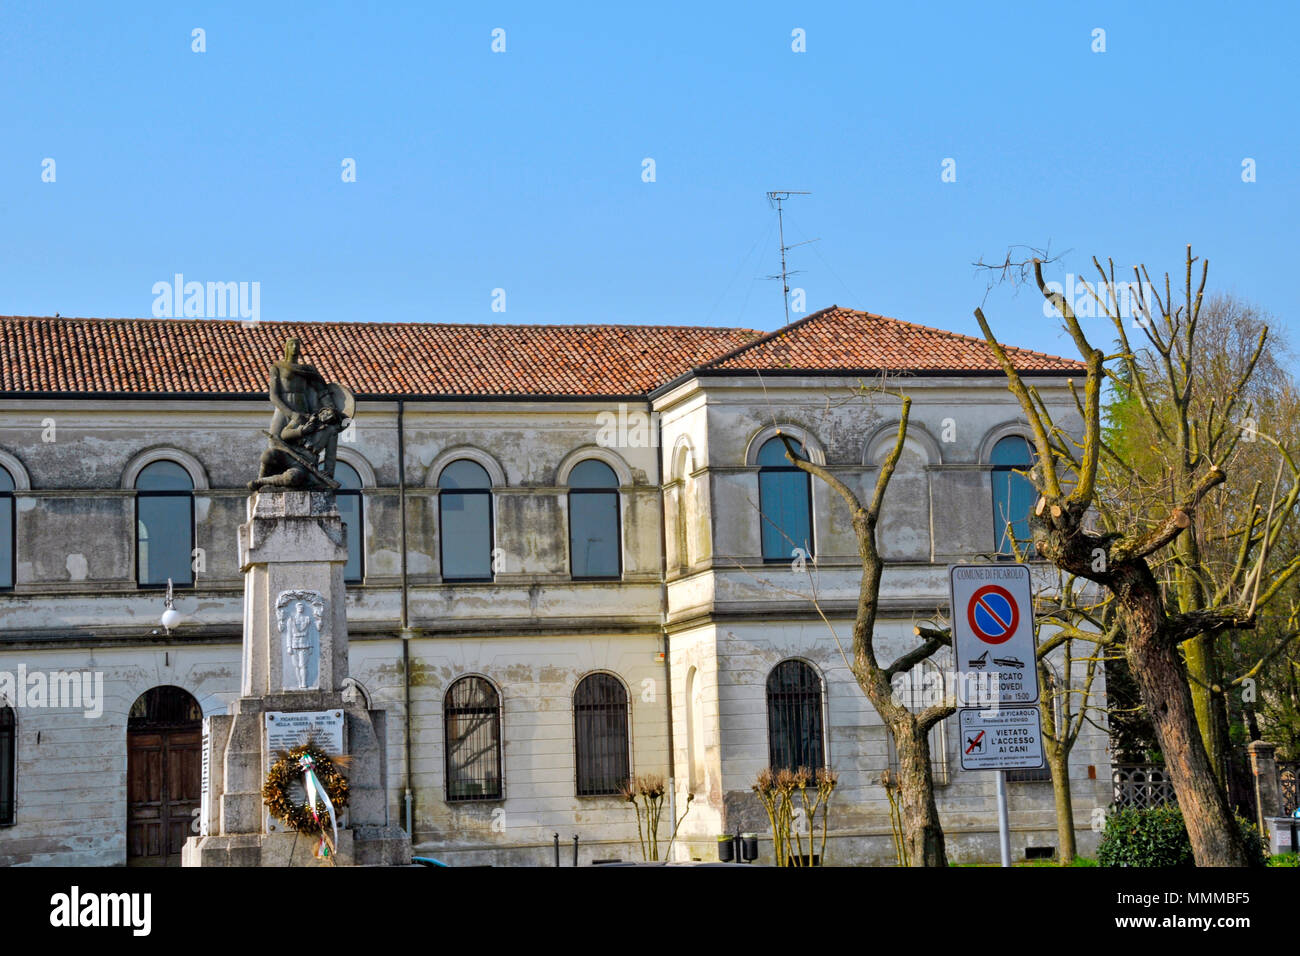 Statue am Comune di Ficarolo Gebäude, Ficarolo, Rovigo, Italien Stockfoto